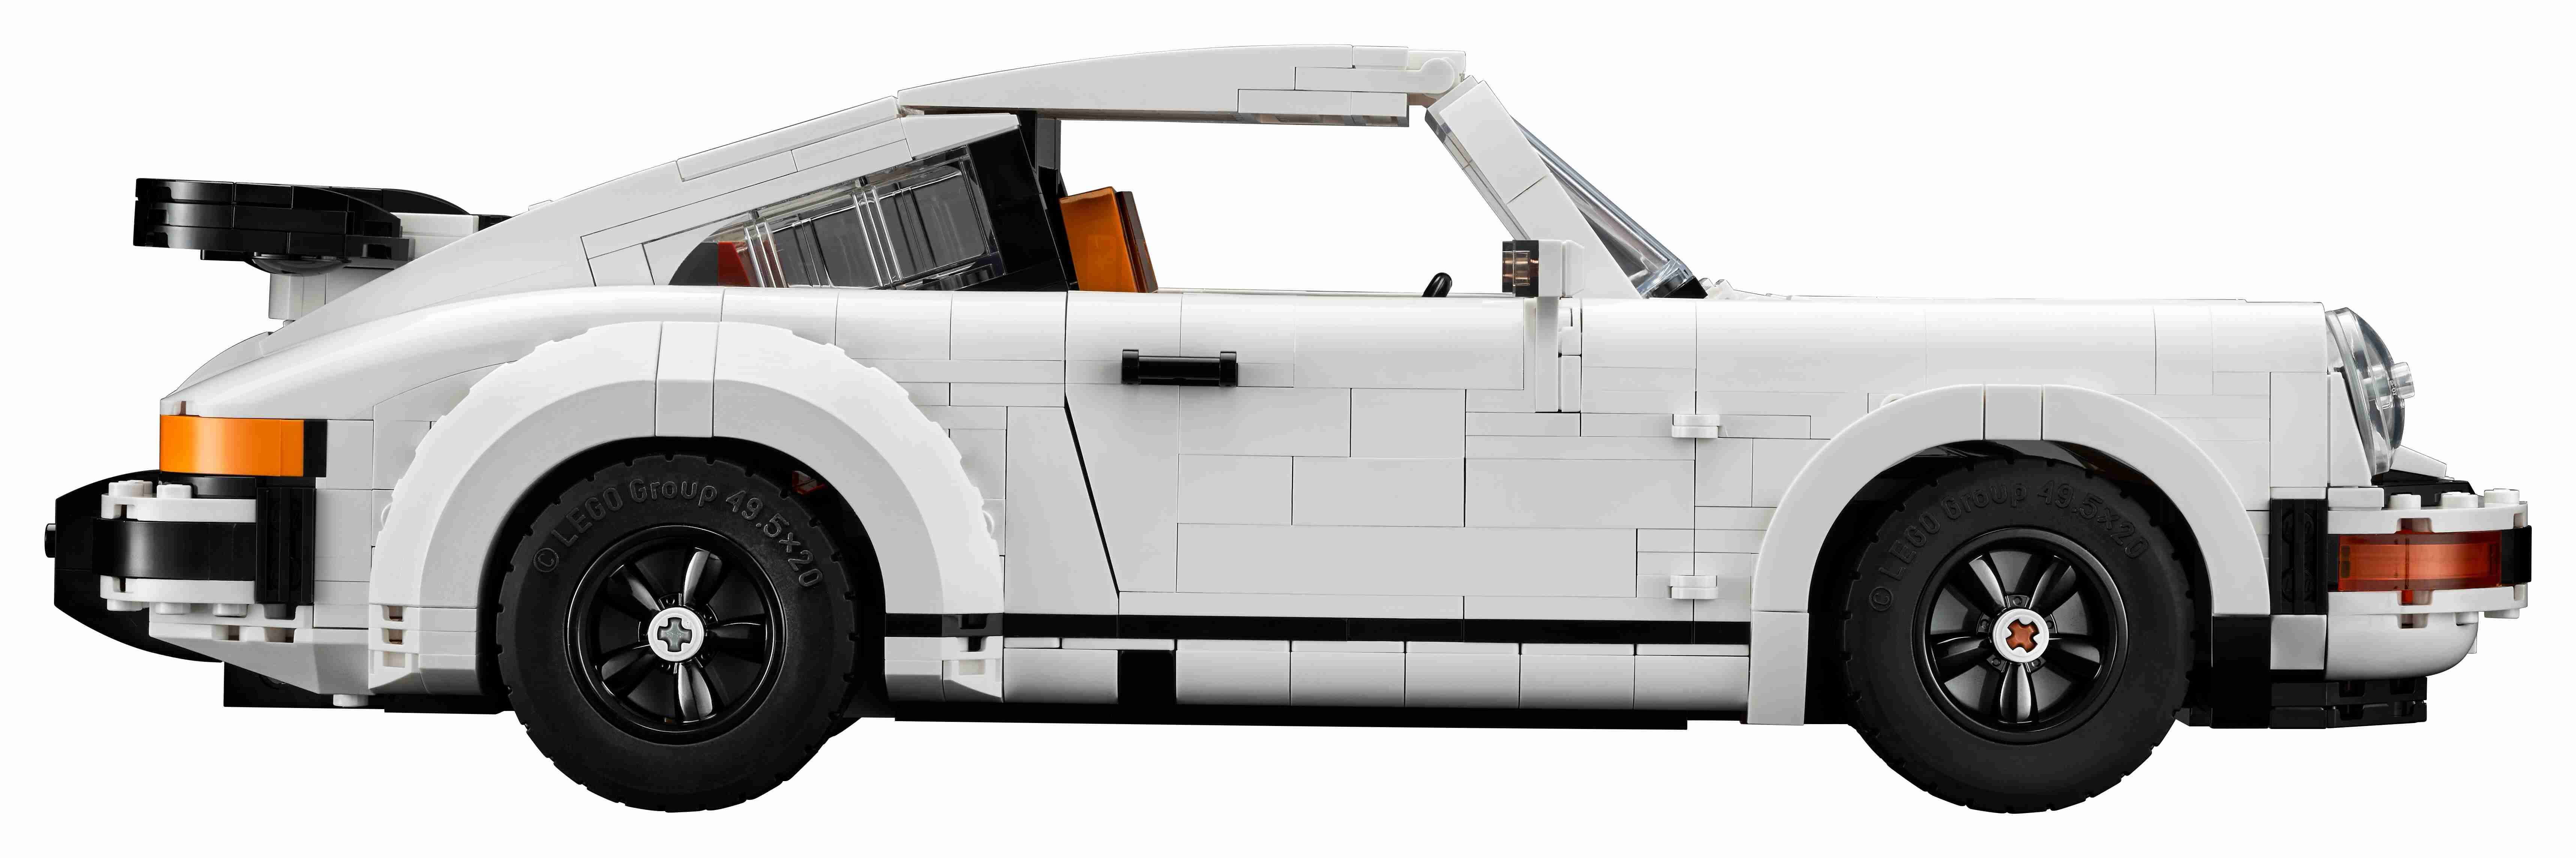 LEGO 10295 Icons Porsche 911, Turbo Targa 2in1, Modellauto, Sammlerstück